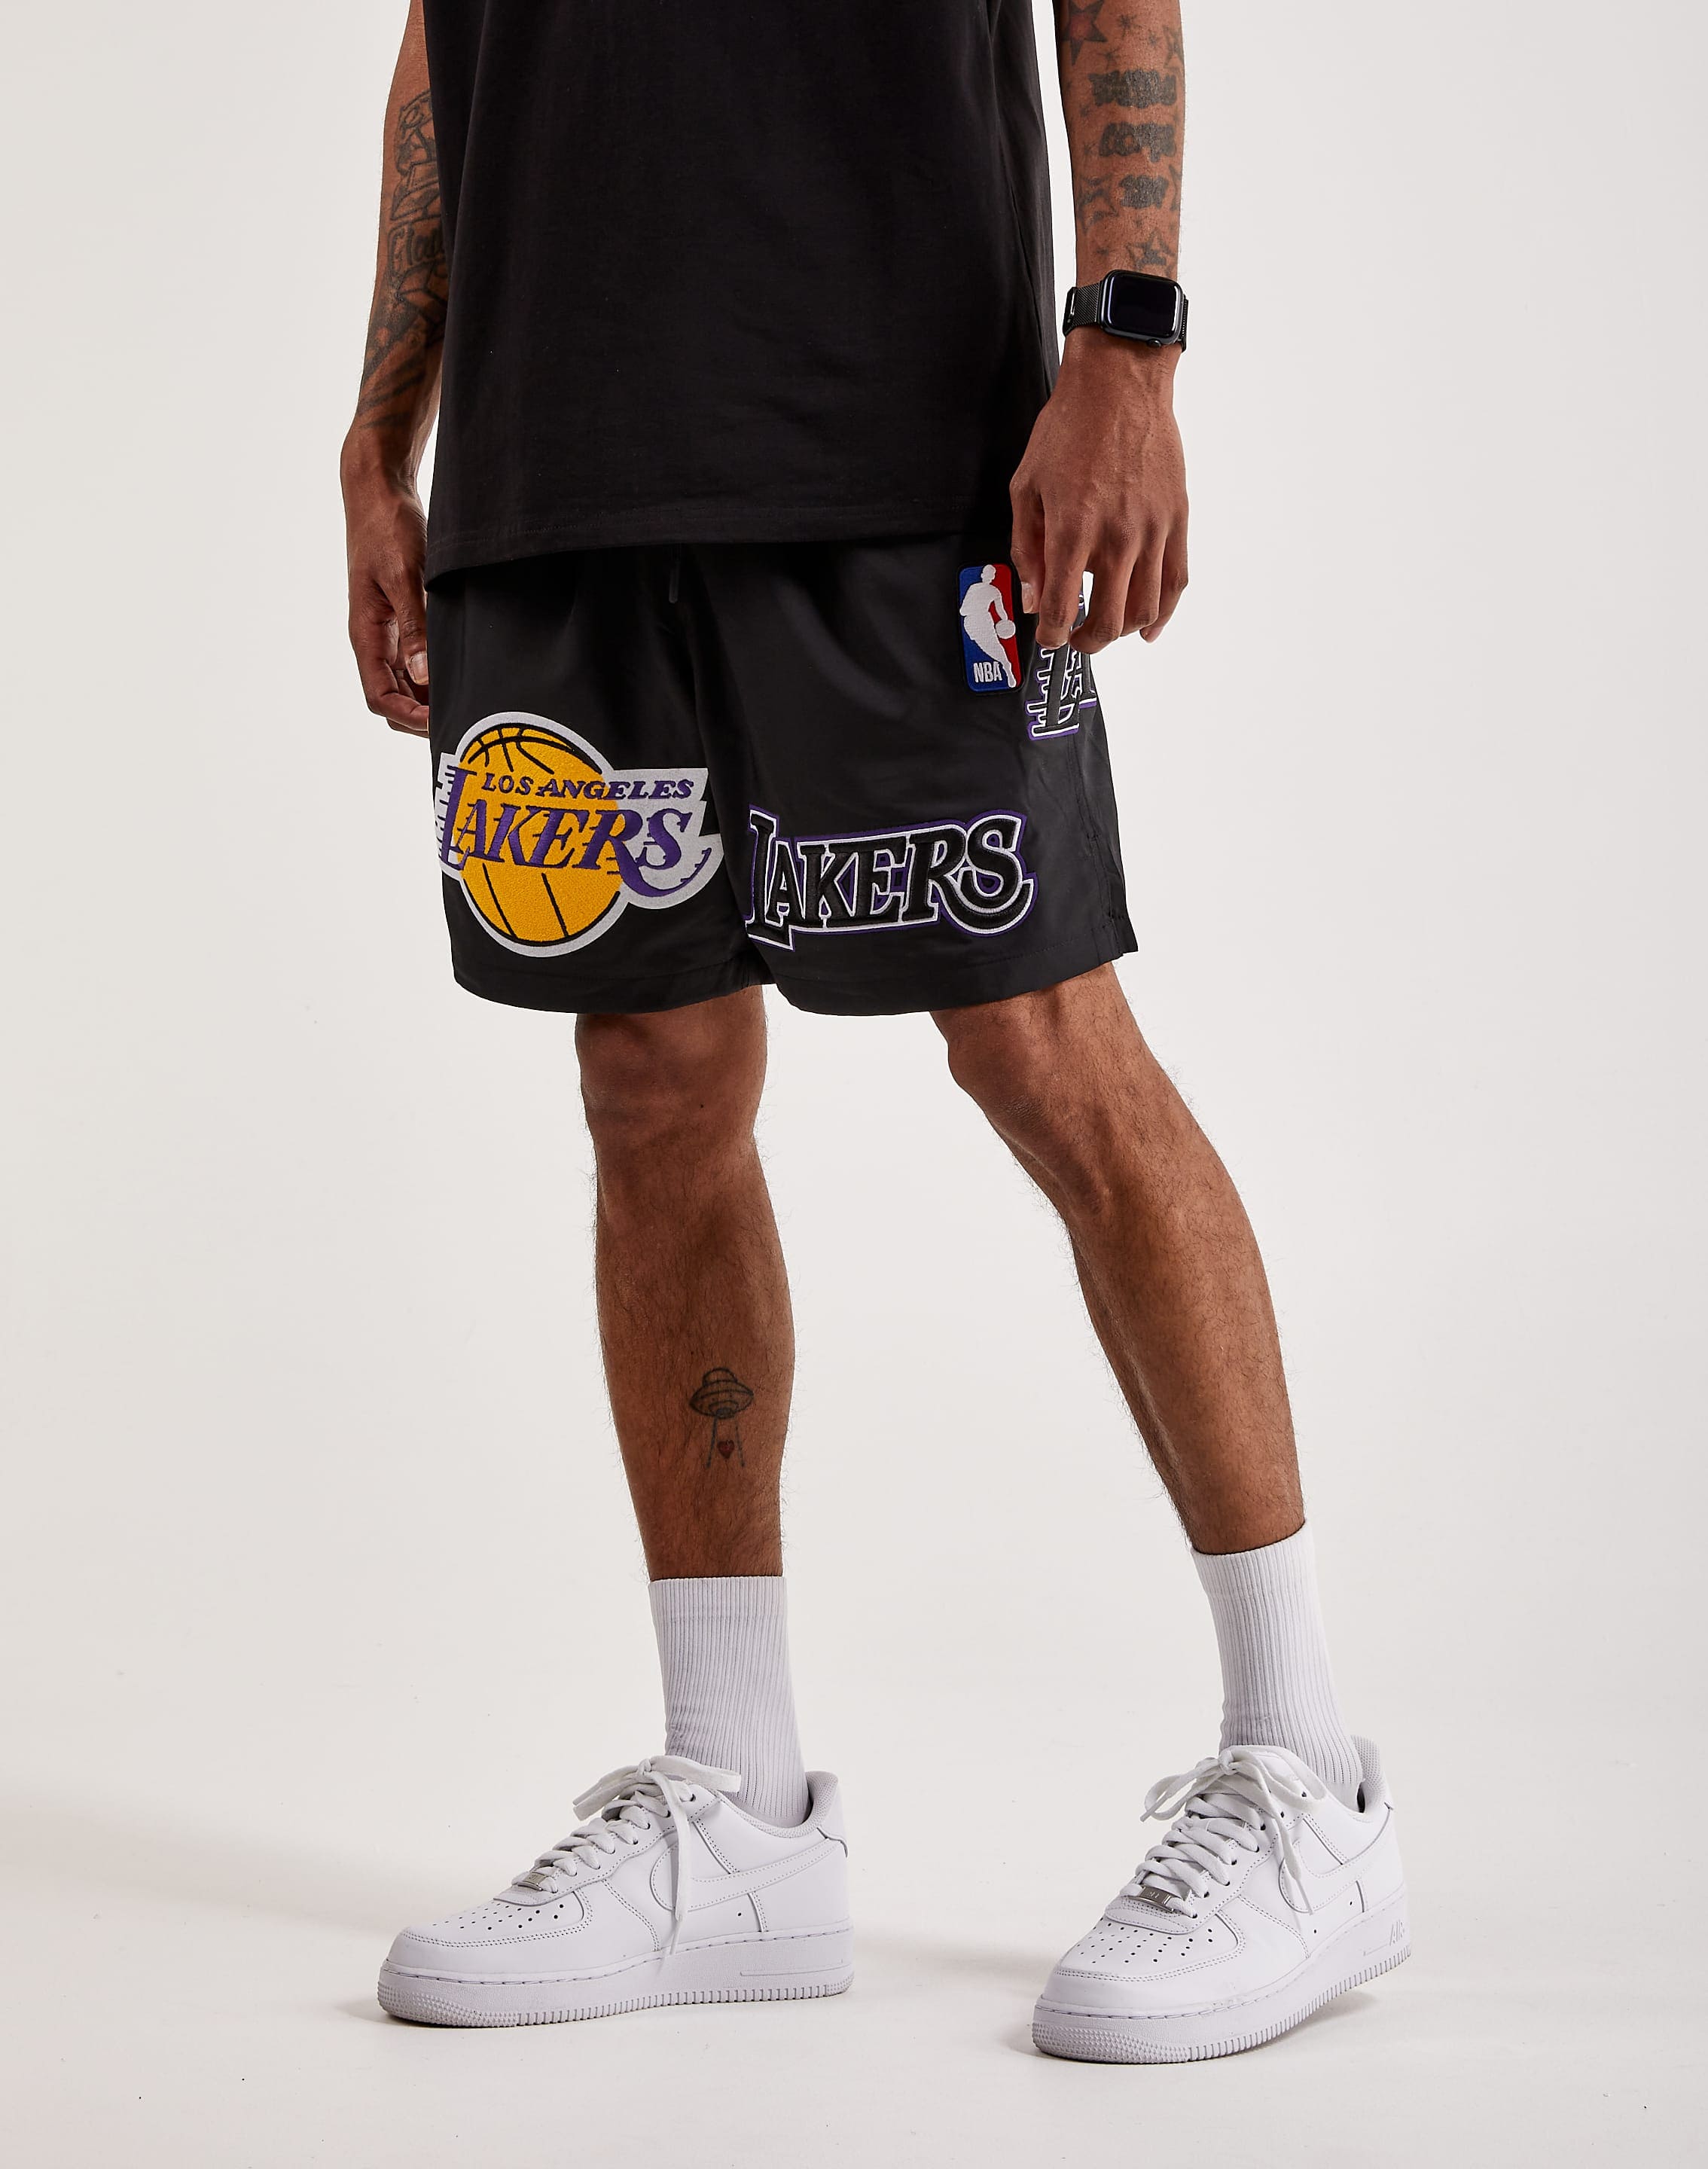 Los Angeles Lakers Basketball Shorts Sports Pants with Zip Pockets